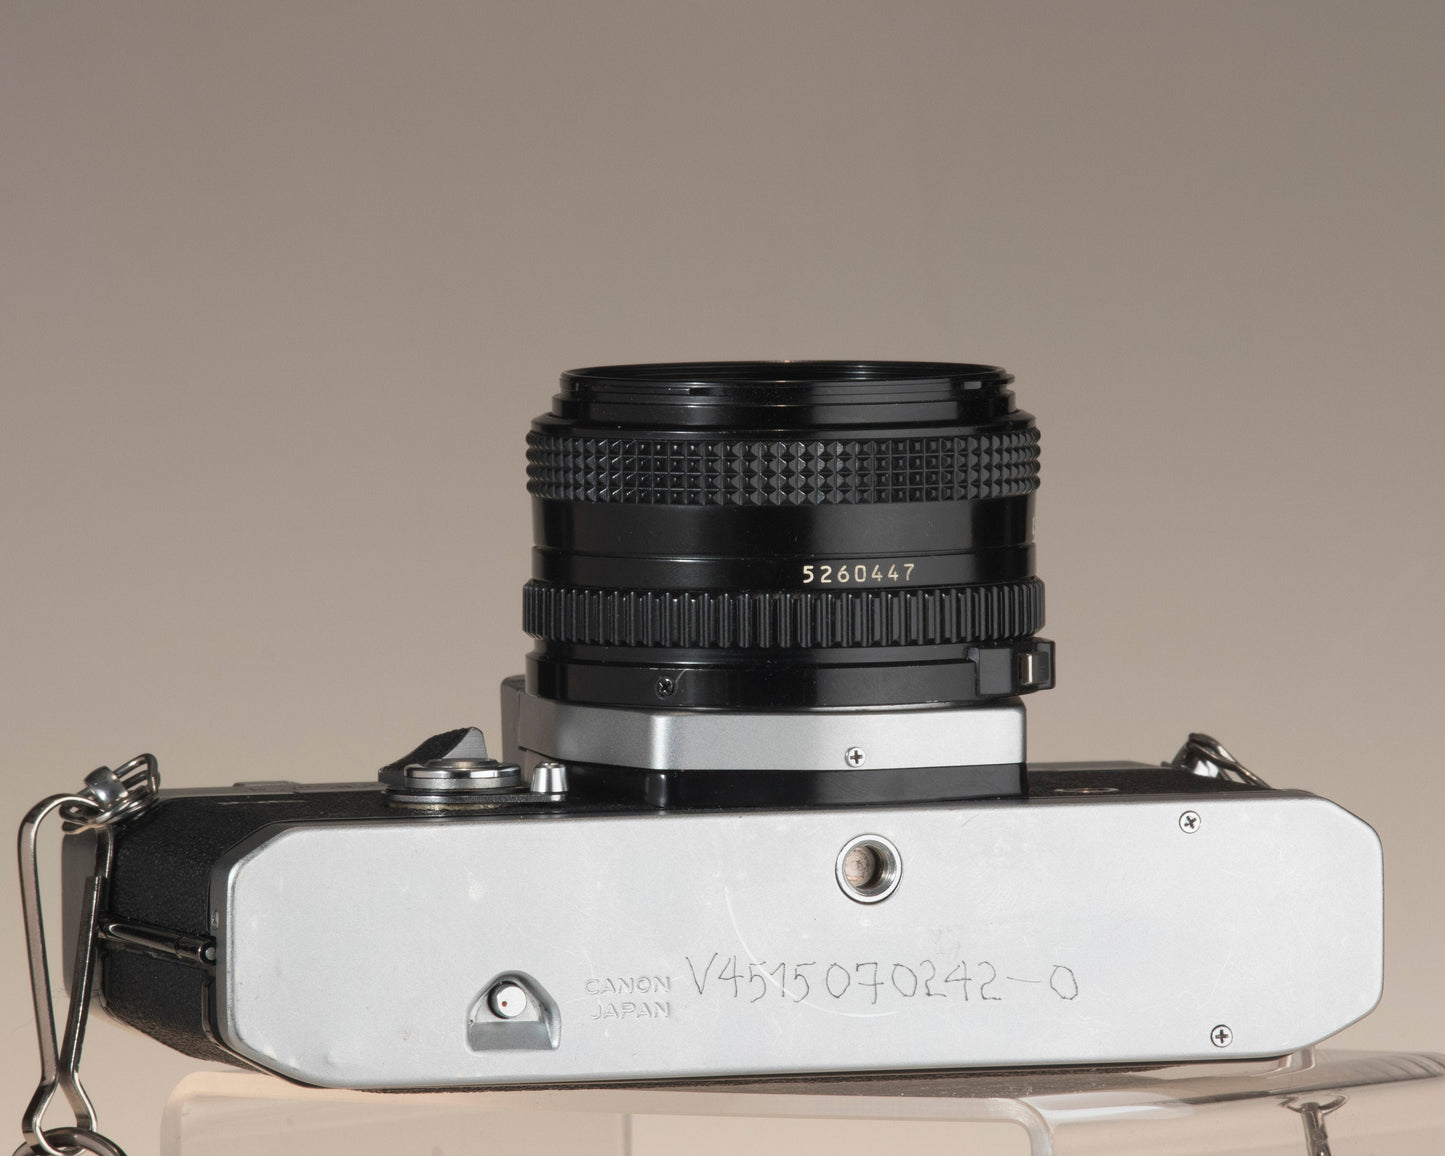 Canon FTb 35mm SLR camera with Canon FD 1:1.8 lens. Rear view.